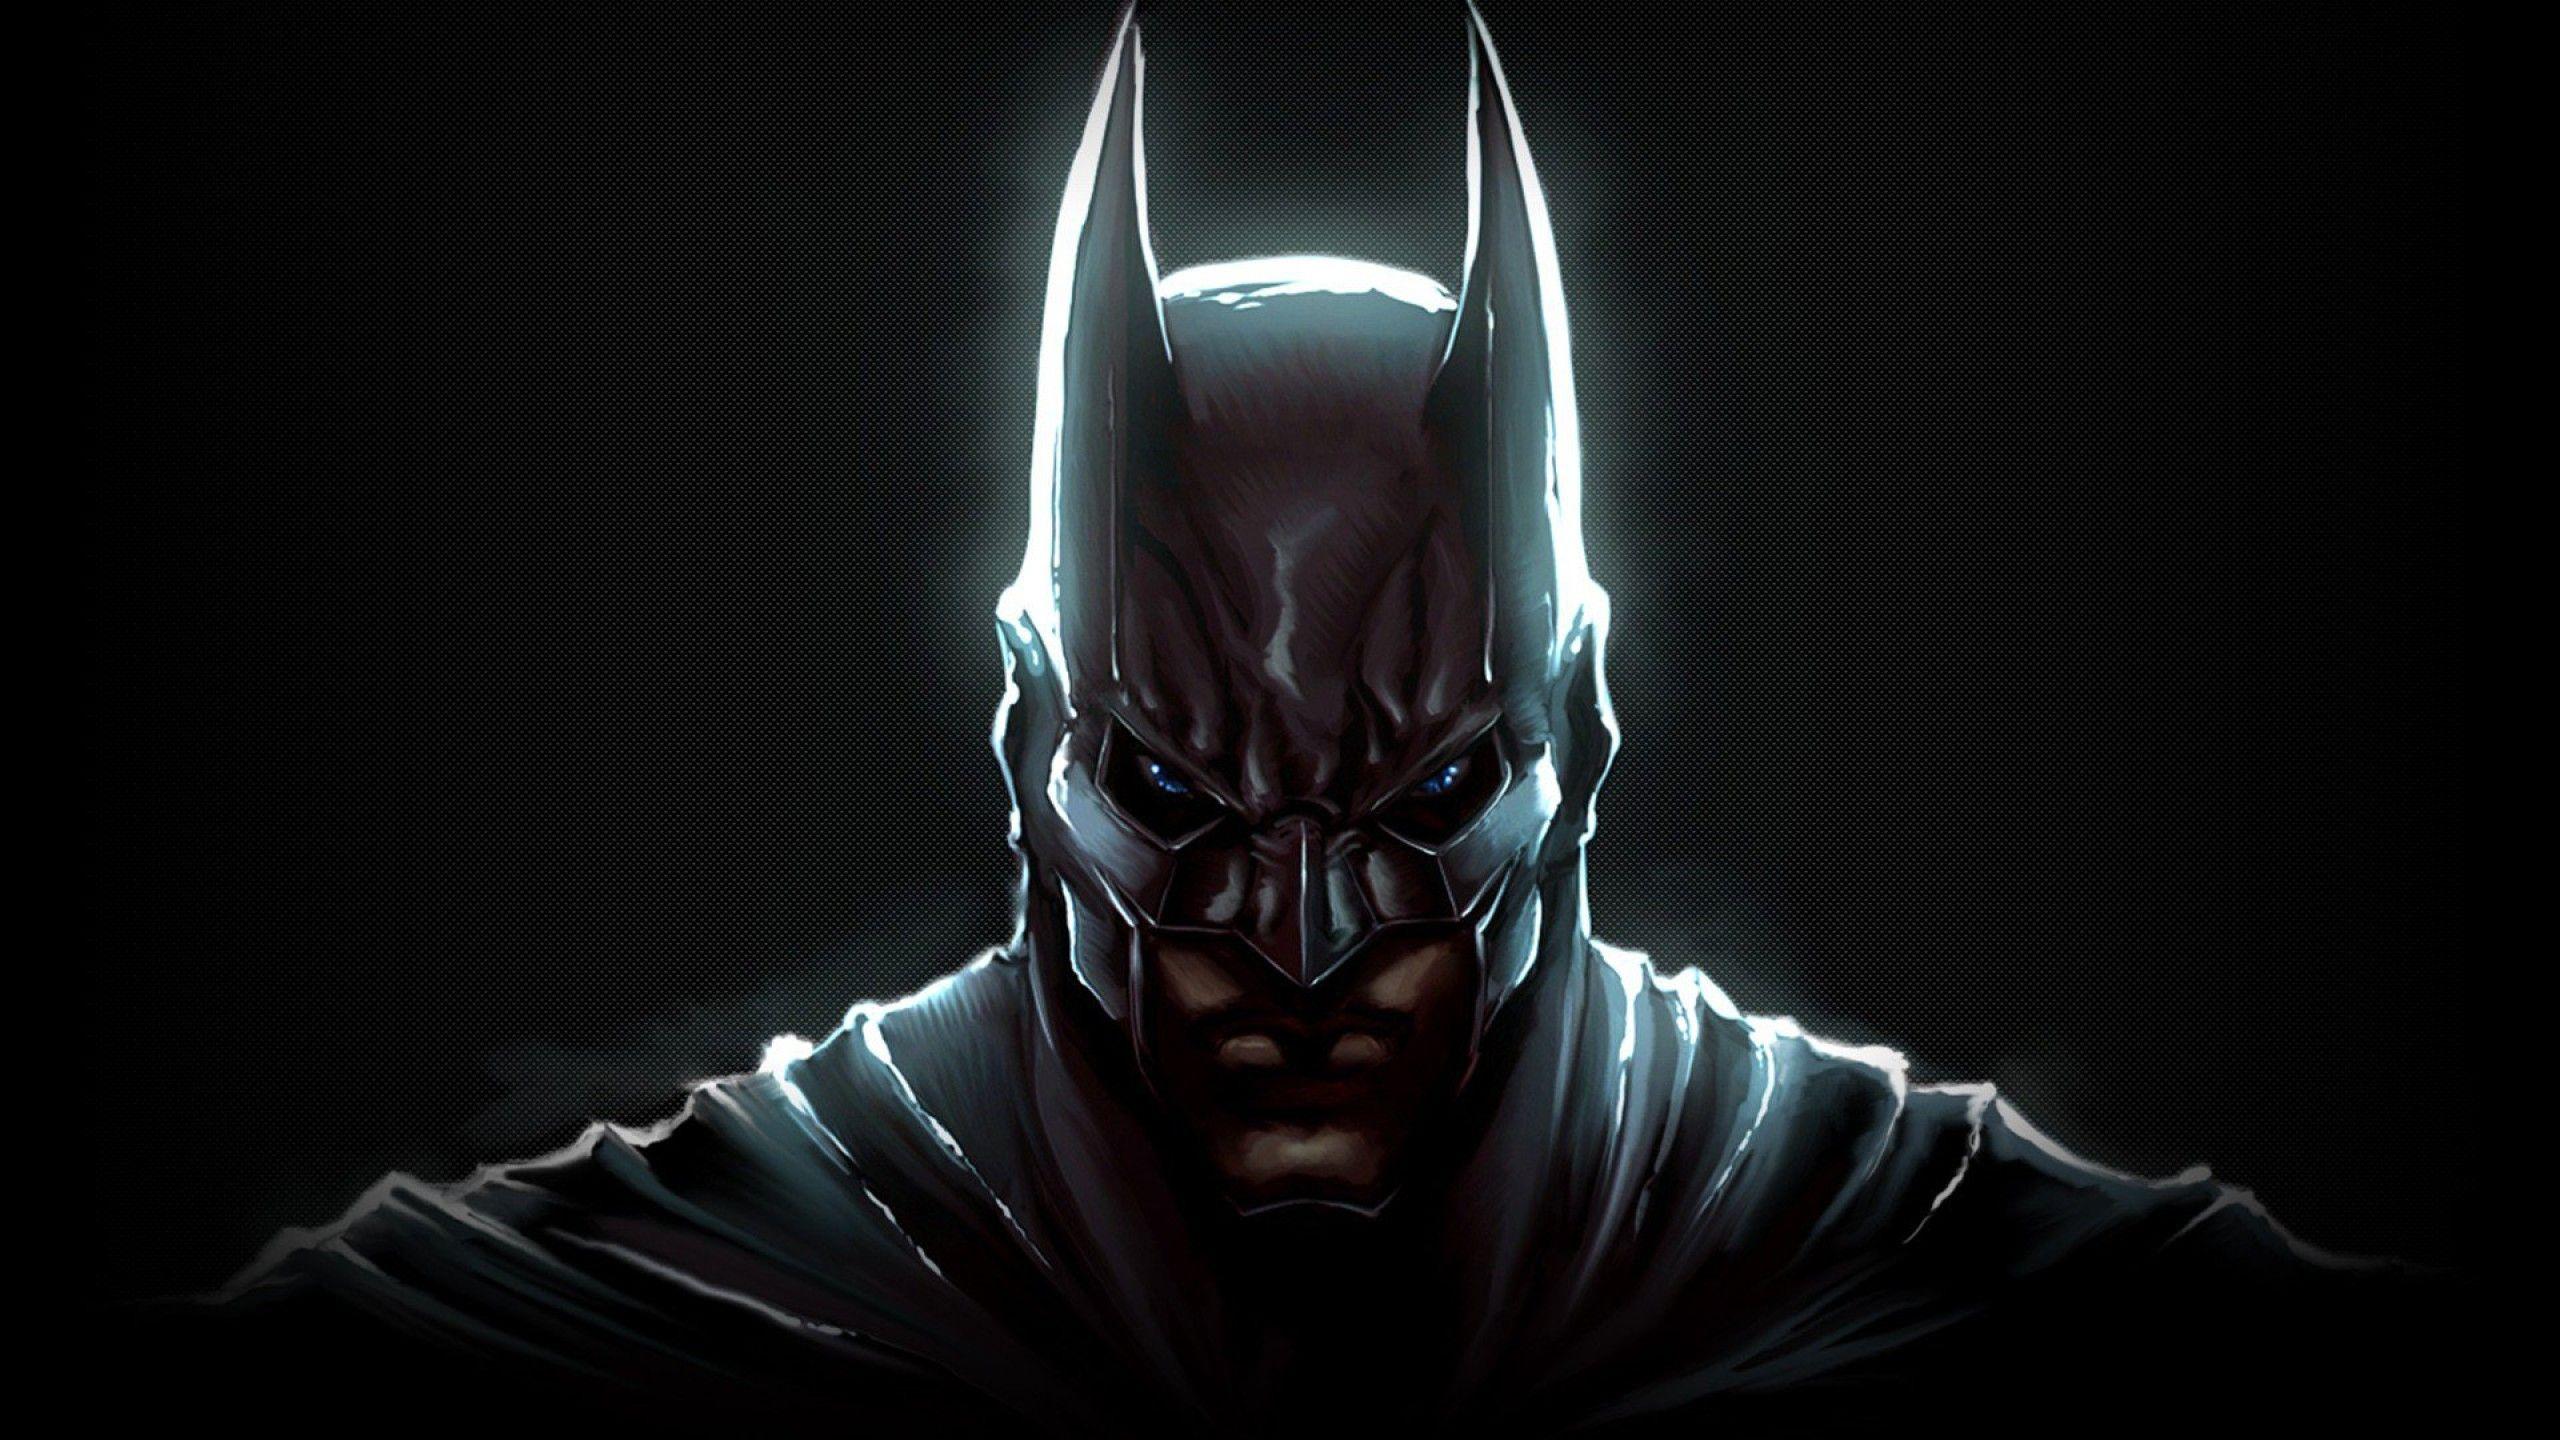 x13 batman phone wallpapers. Thumbnail: The Dark Knight by Abraão